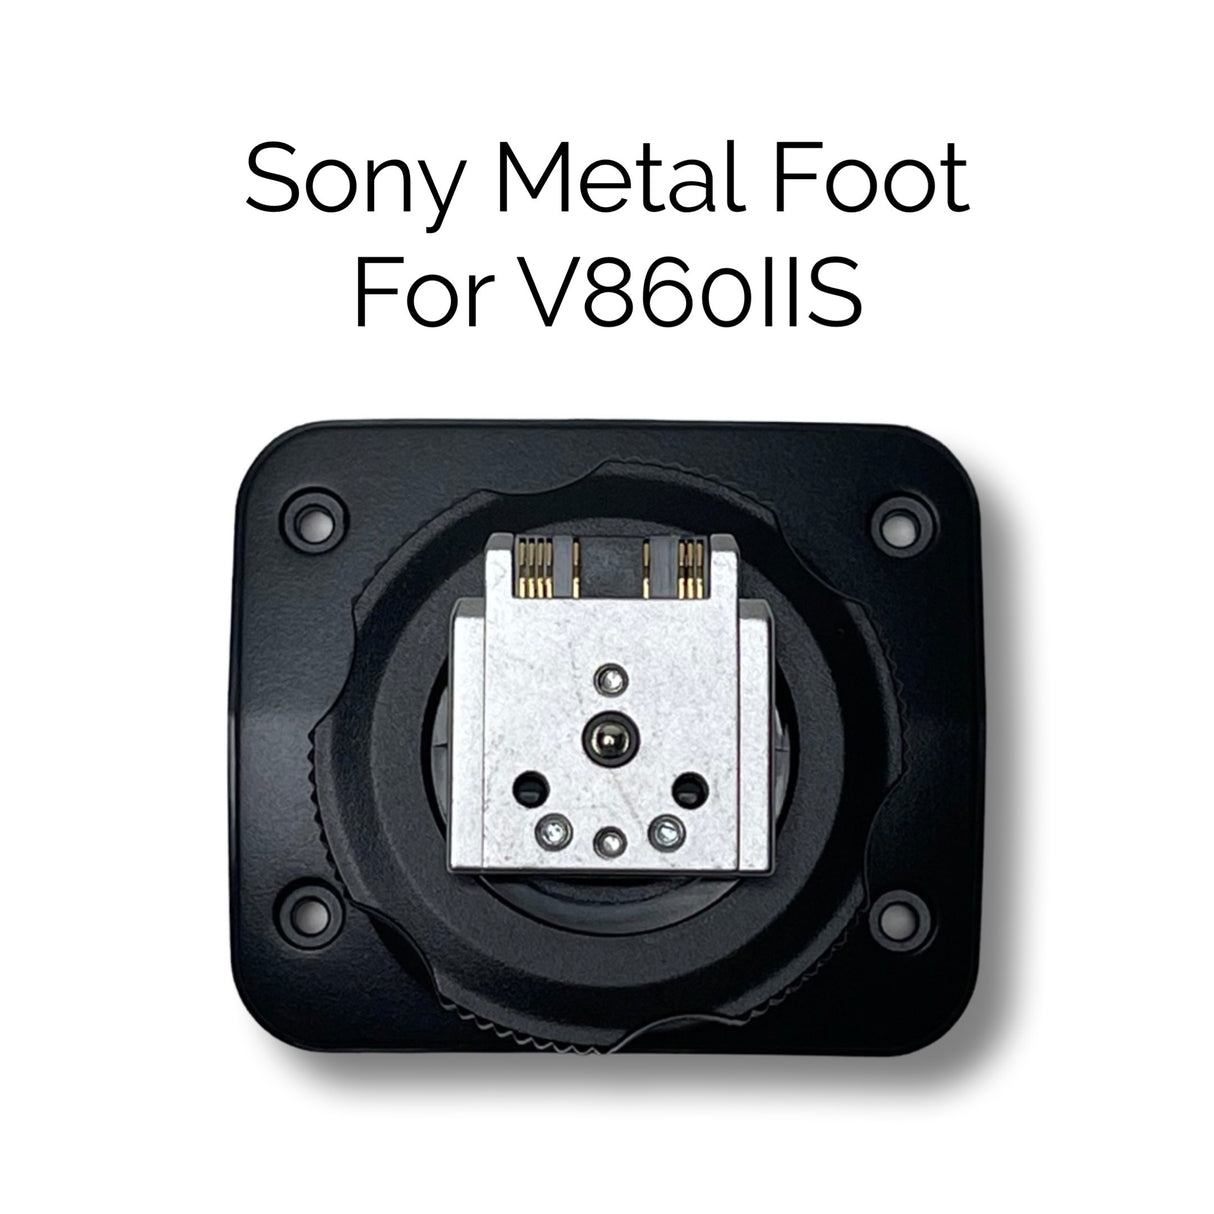 Sony metal hotshoe/foot for the V860II